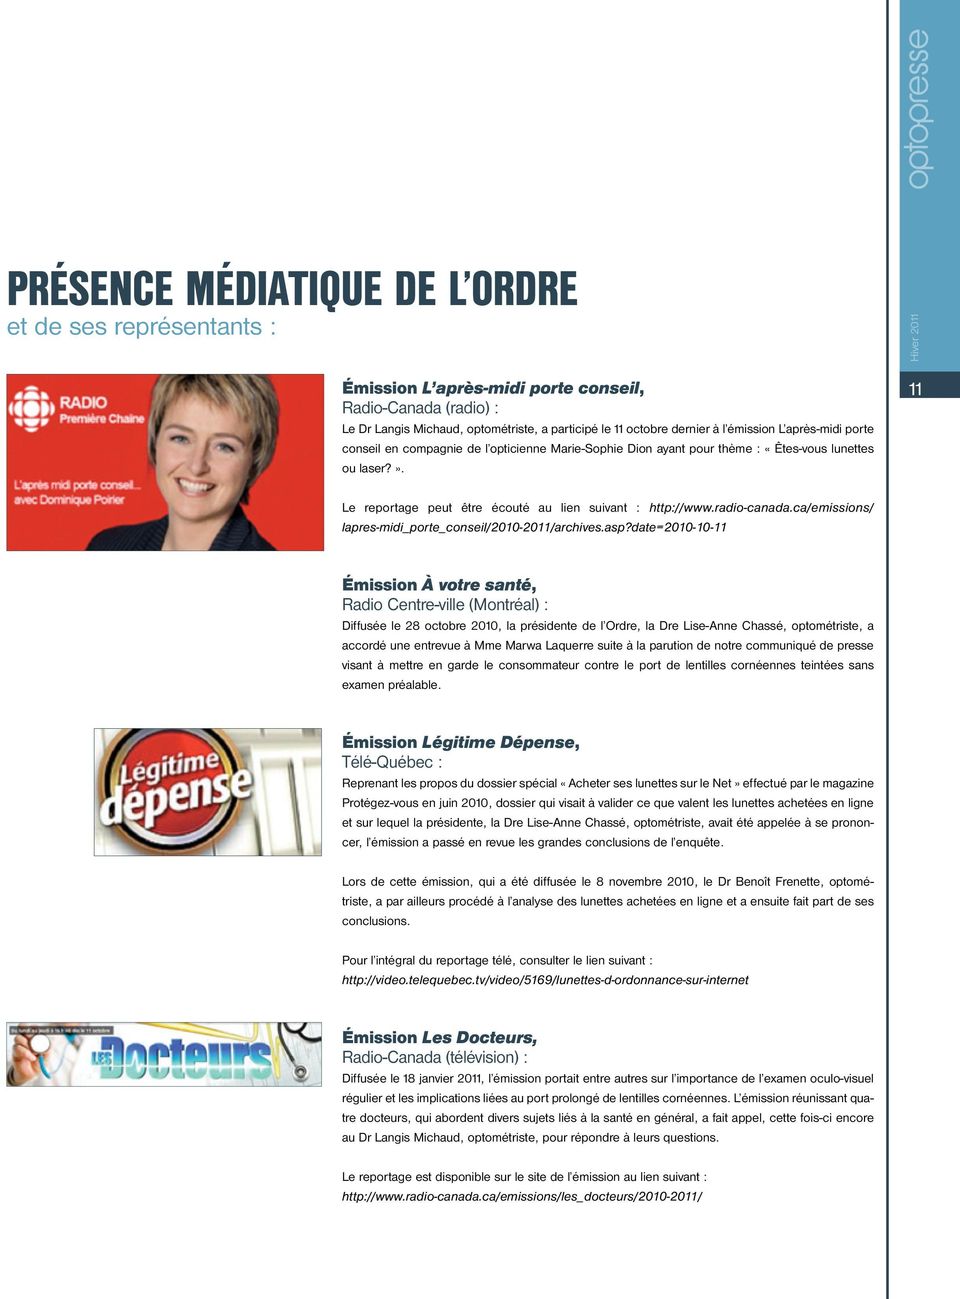 radio-canada.ca/emissions/ lapres-midi_porte_conseil/2010-2011/archives.asp?